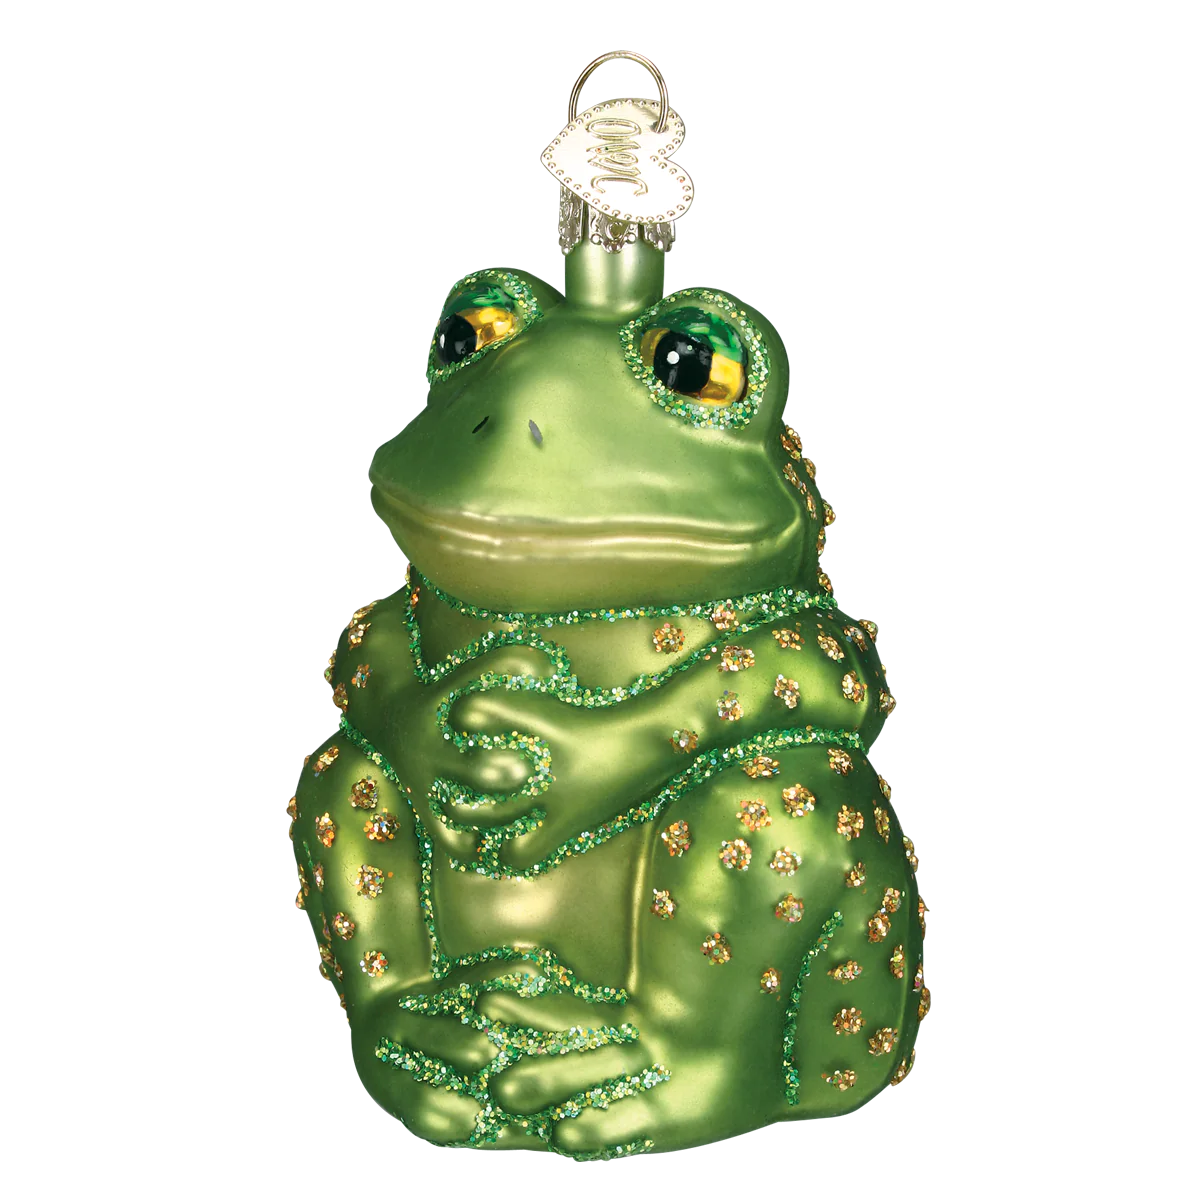 Ornament, Sitting Frog